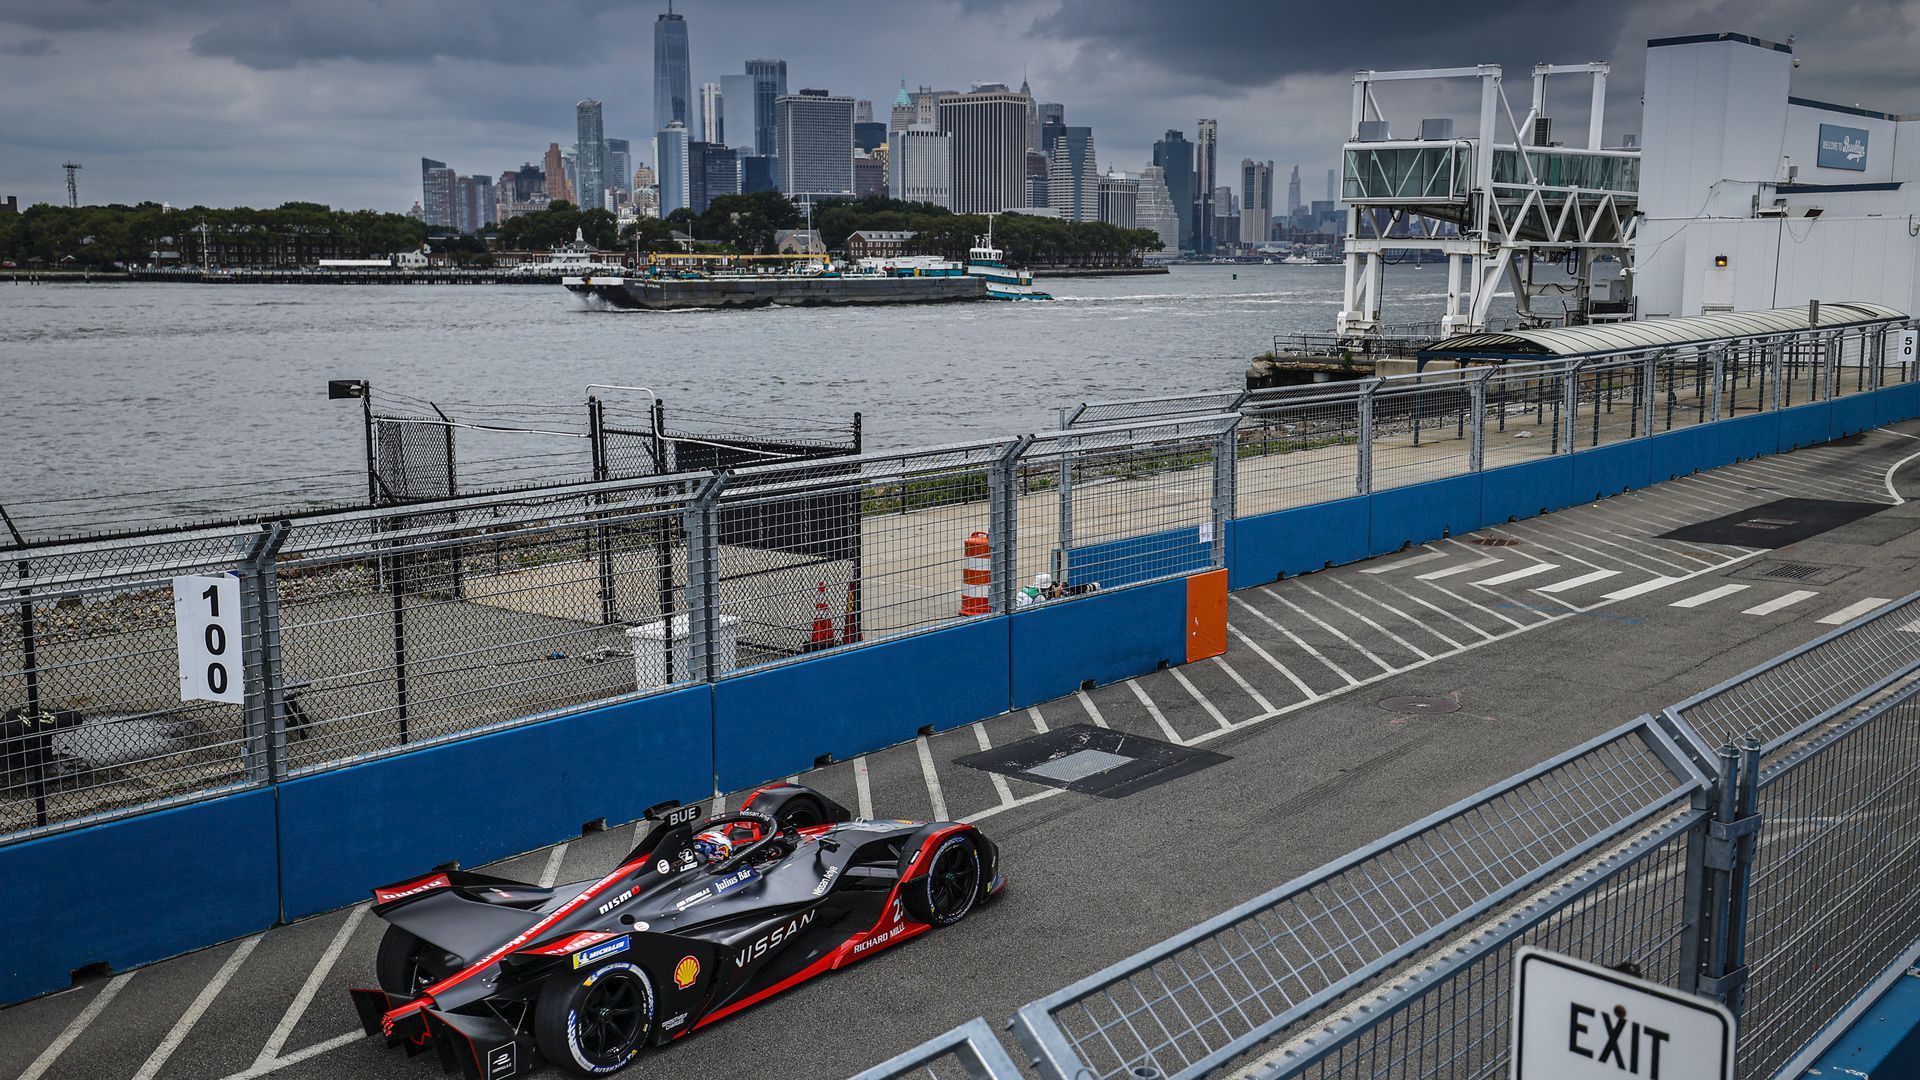 New York's Formula E electric vehicle race